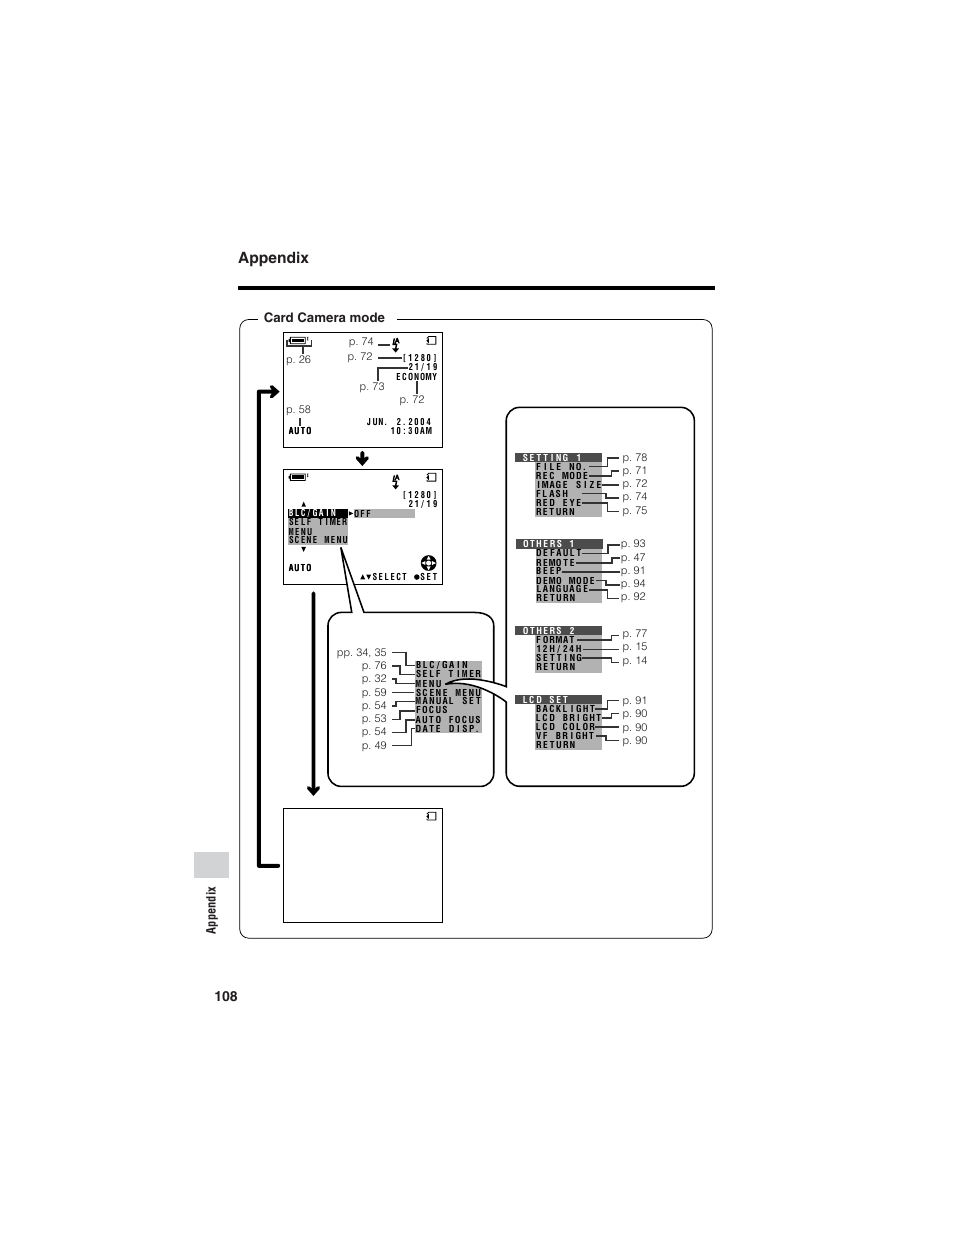 Appendix, Card camera mode | Sharp VL-Z7U User Manual | Page 122 / 140